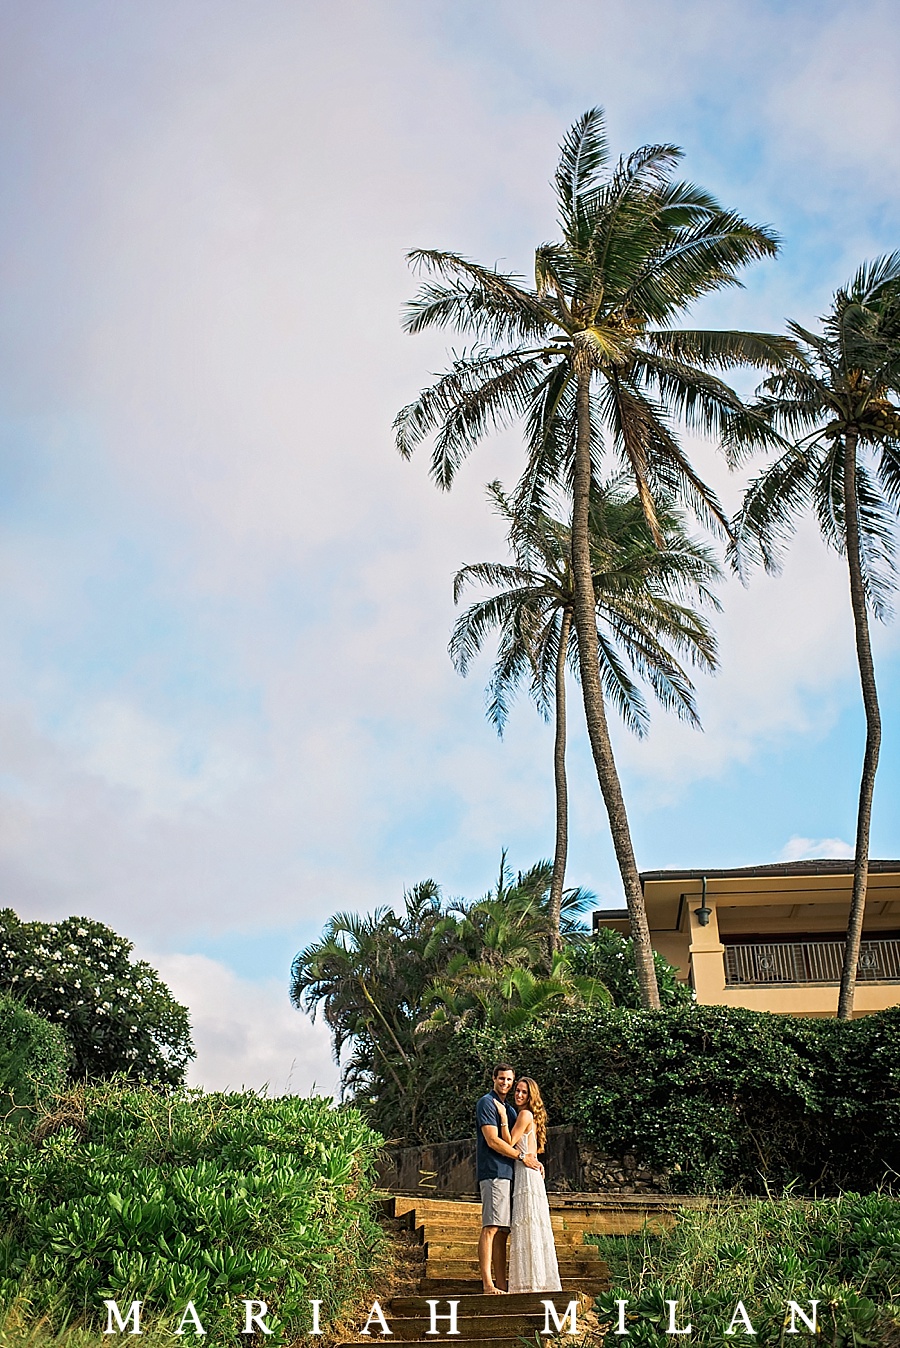 Maui Honeymoon Photo Session at Ironwood Beach, Hawaii